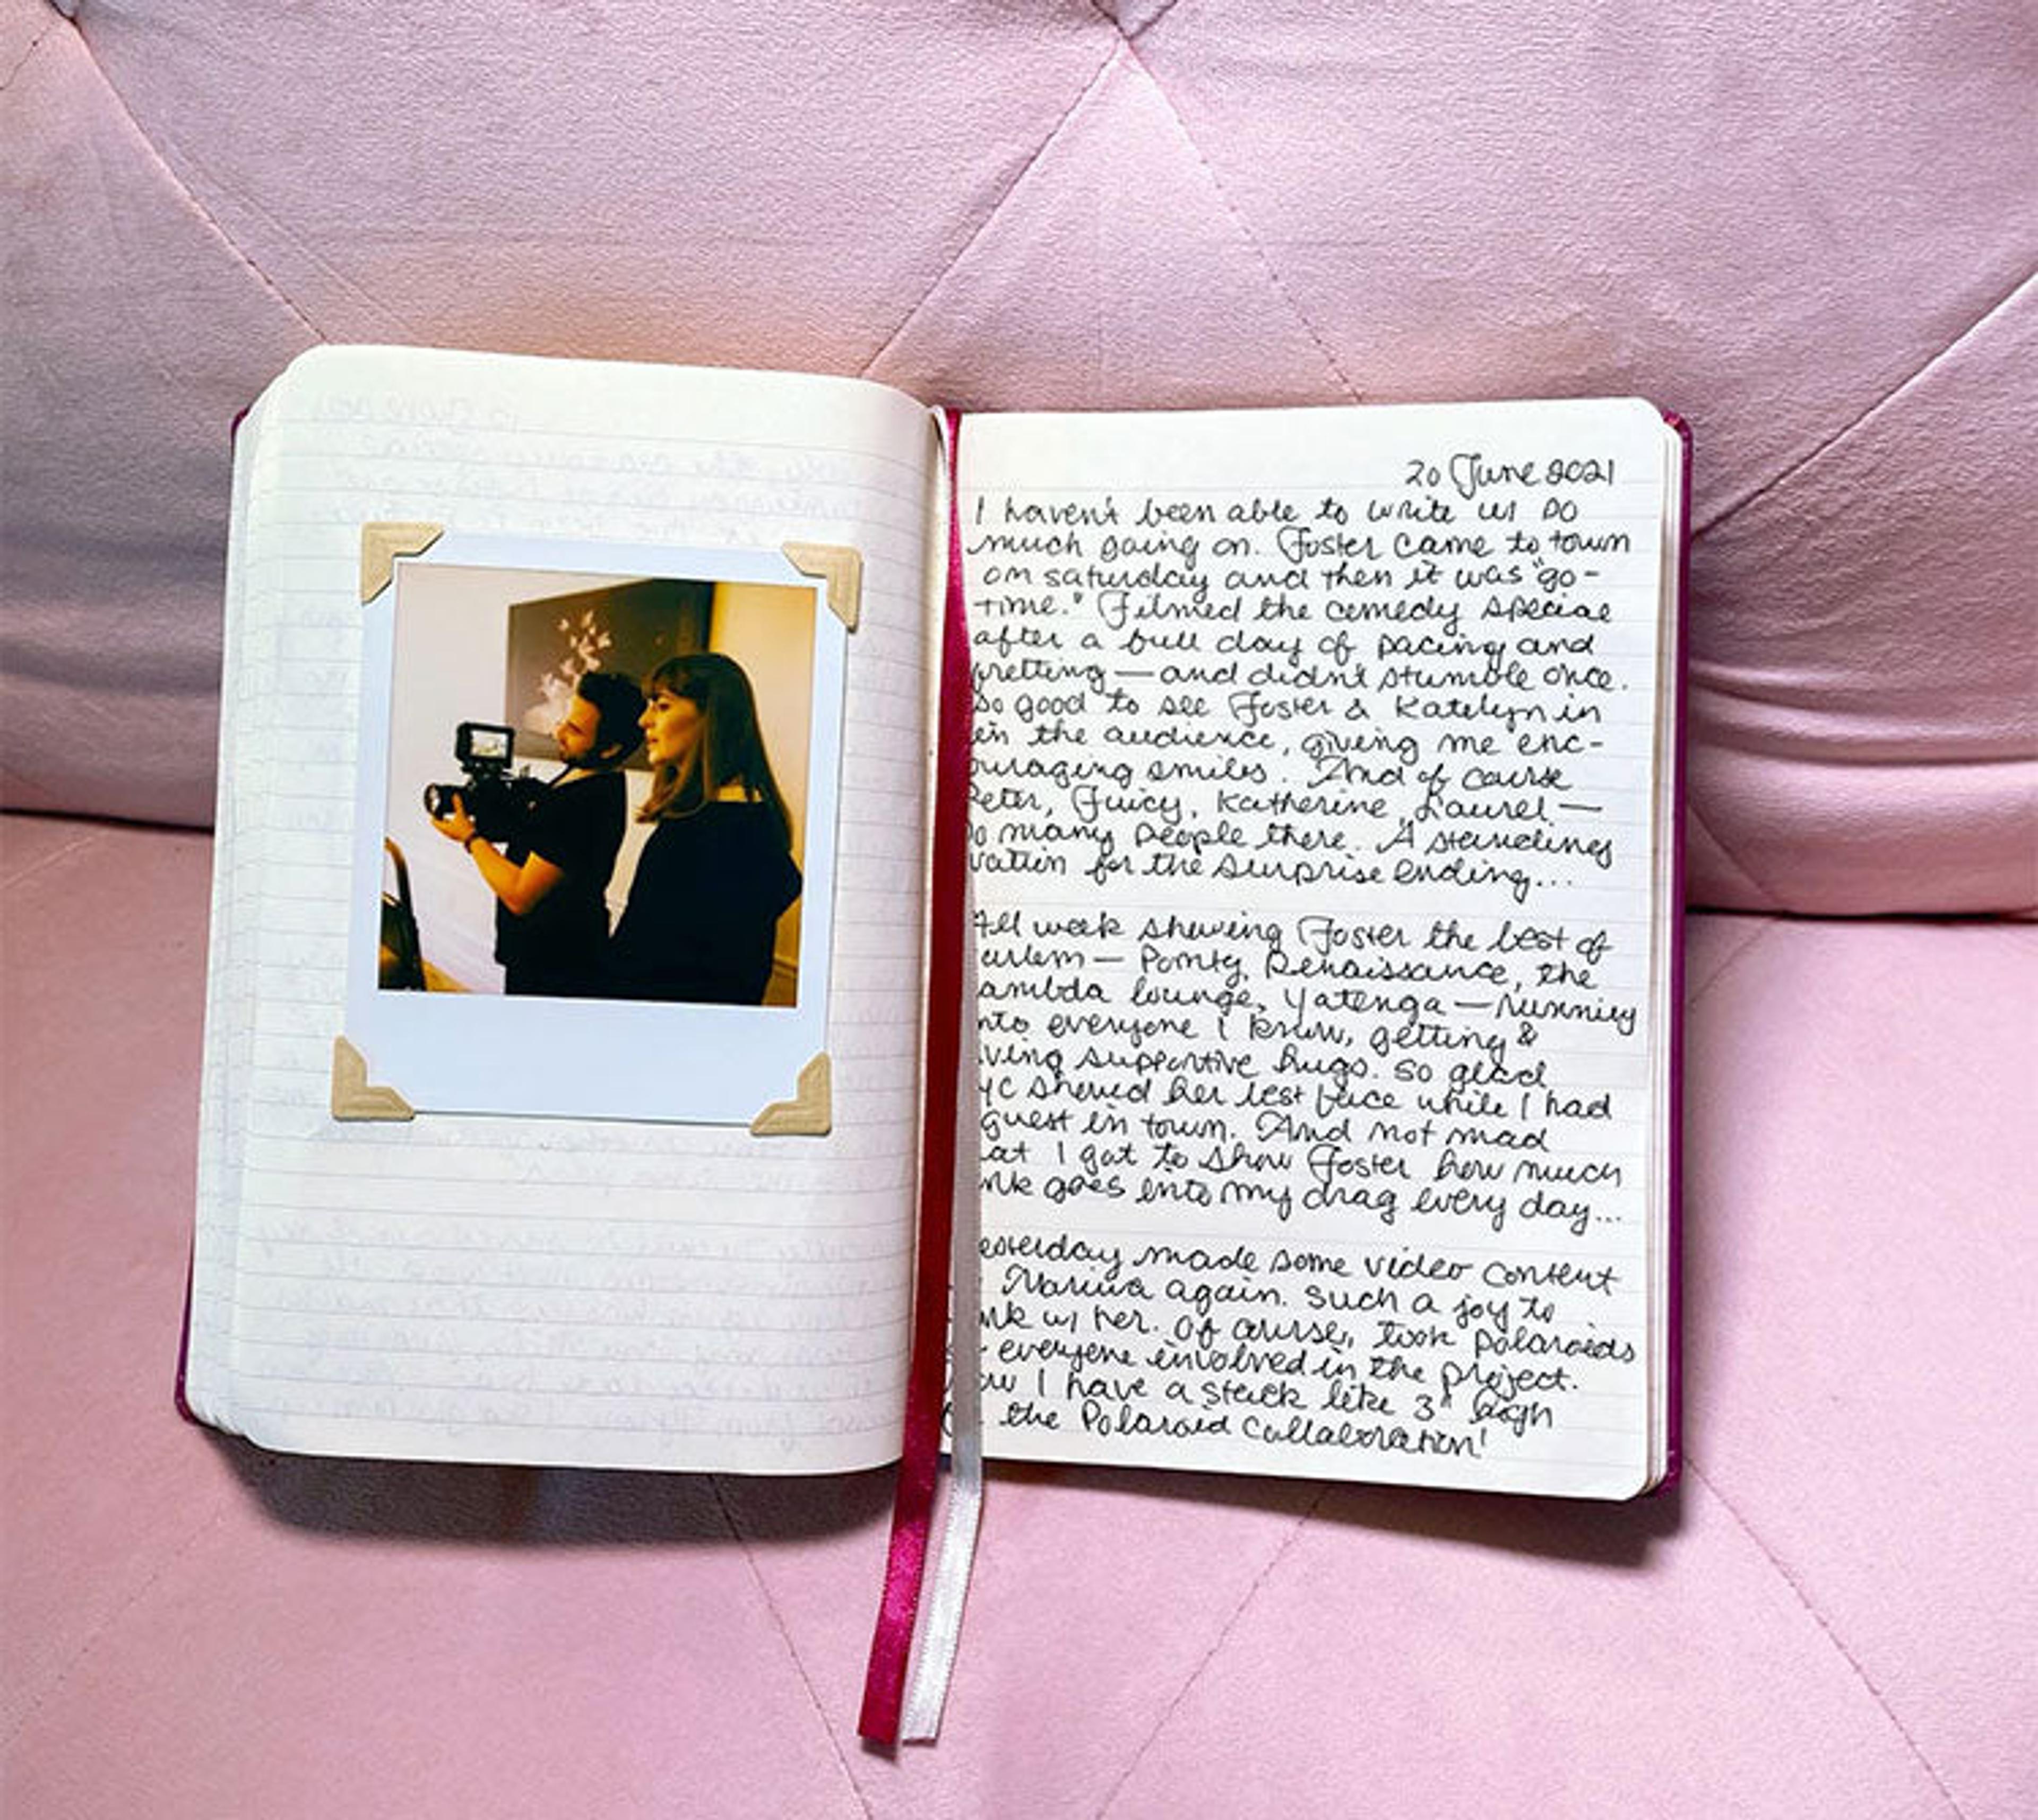 Polaroid photo journal by Miz Cracker